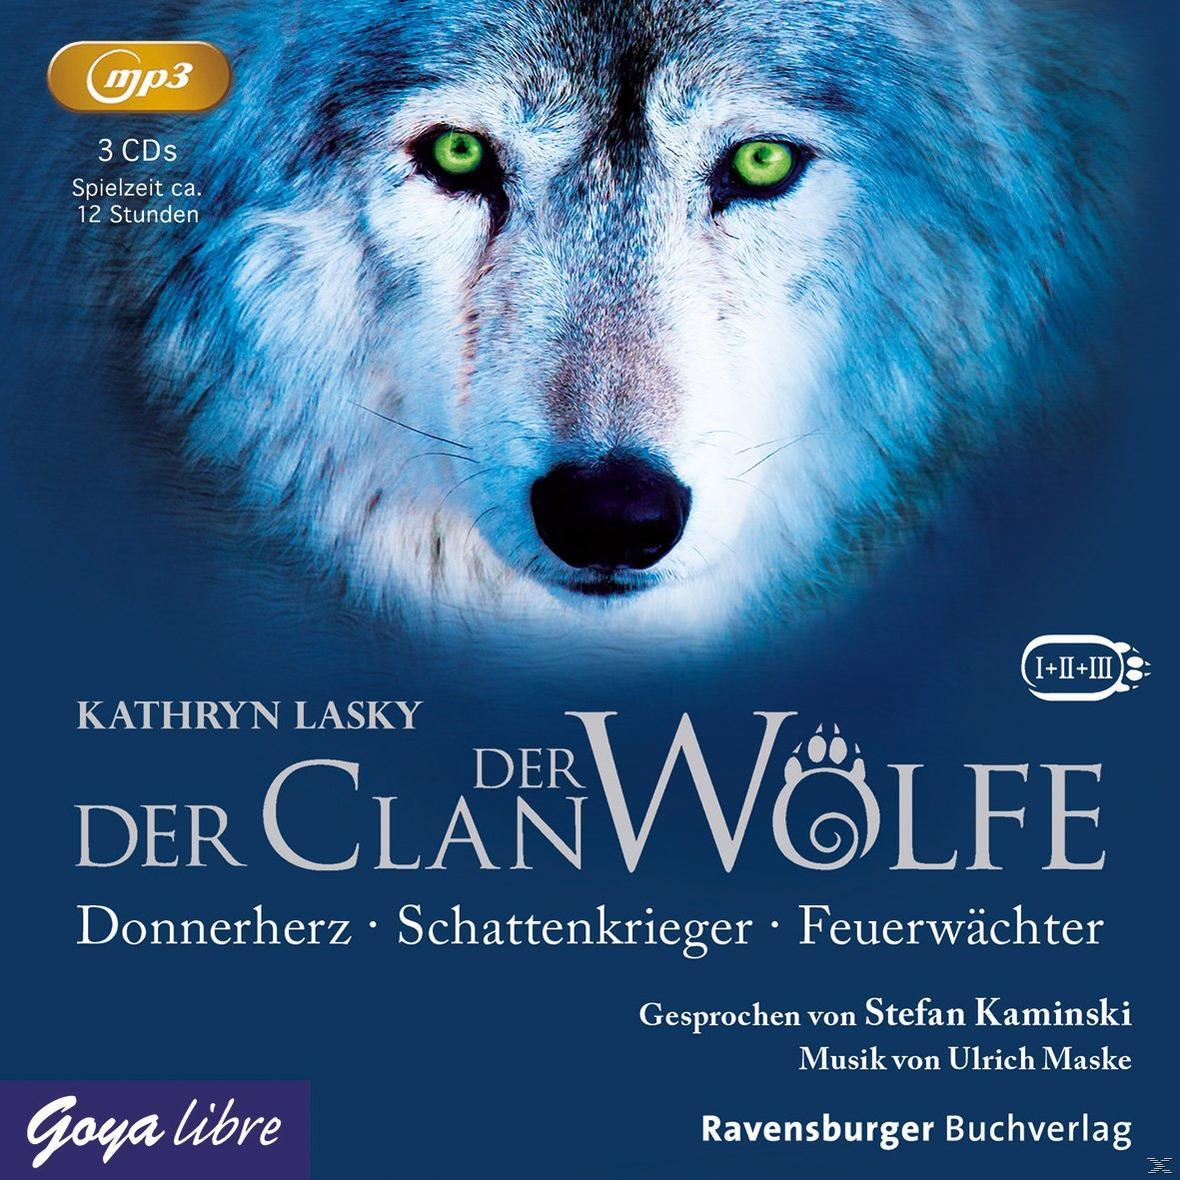 Lasky Wölfe (MP3-CD) Der - 1-3.Donnerherz, Schattenkrieger, - Feuerwächter Kathryn Clan